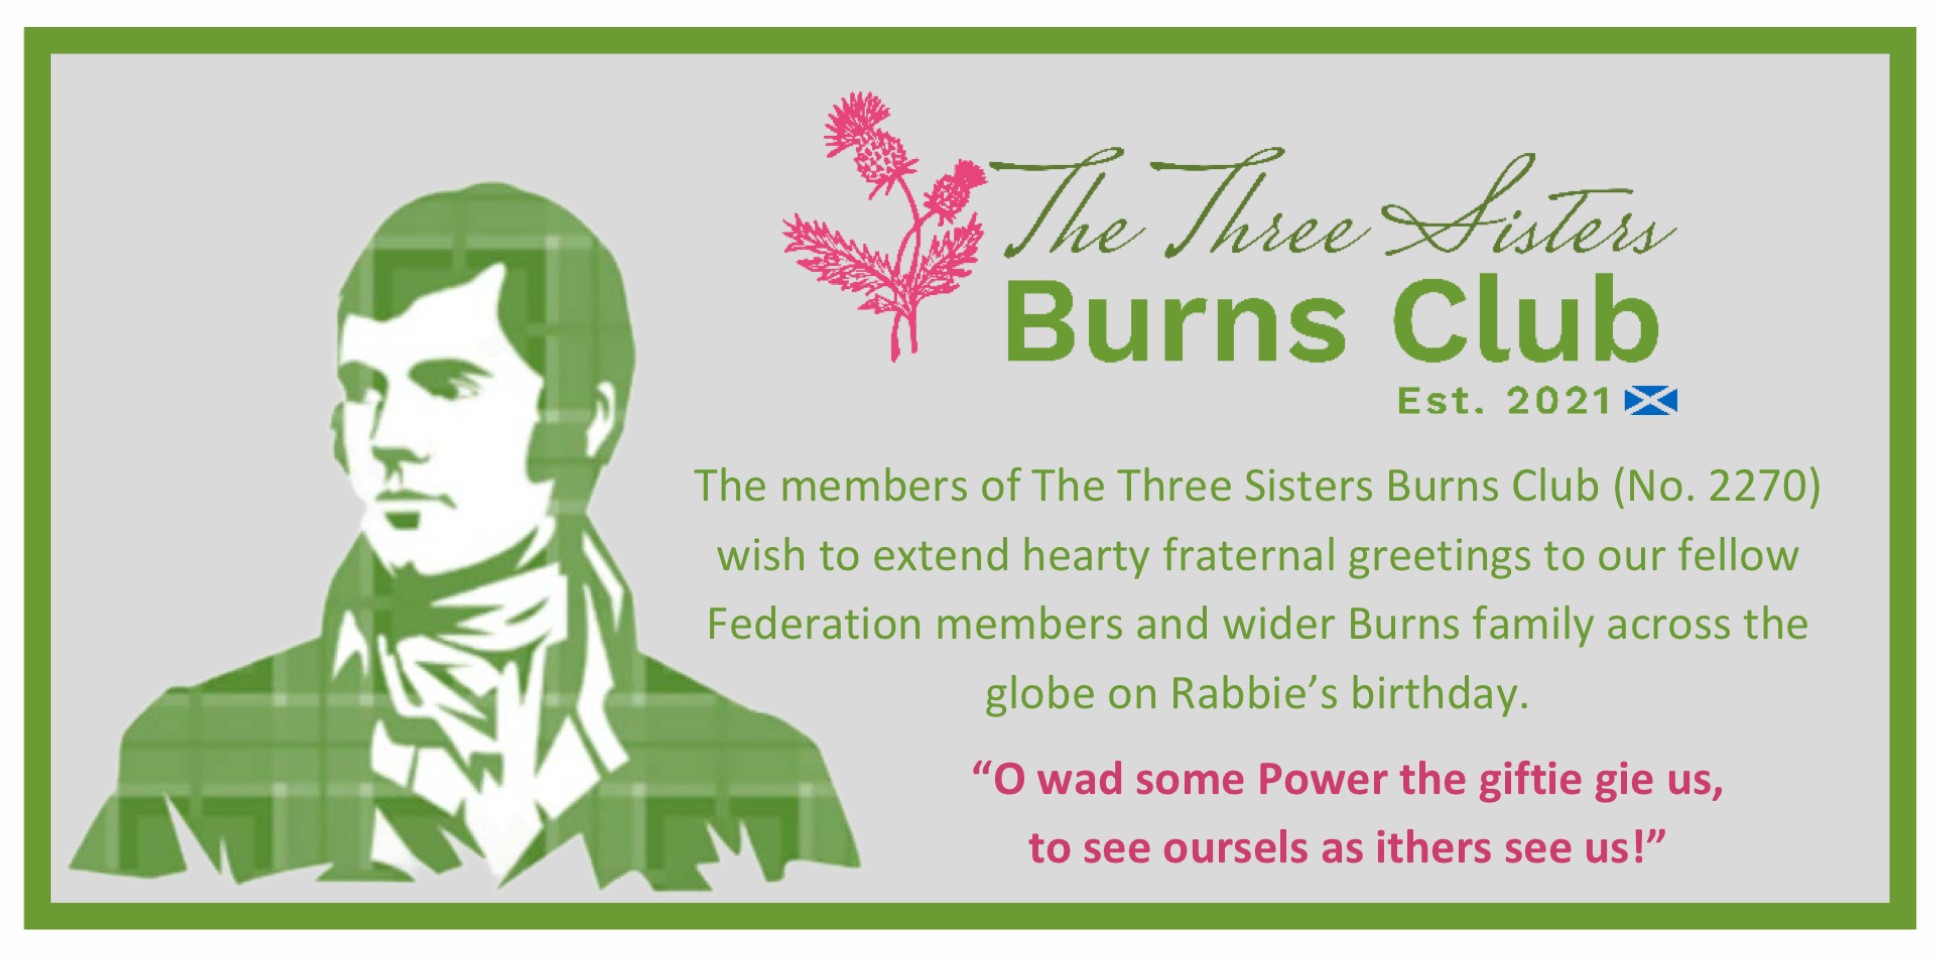 The Three Sisters Burns Club